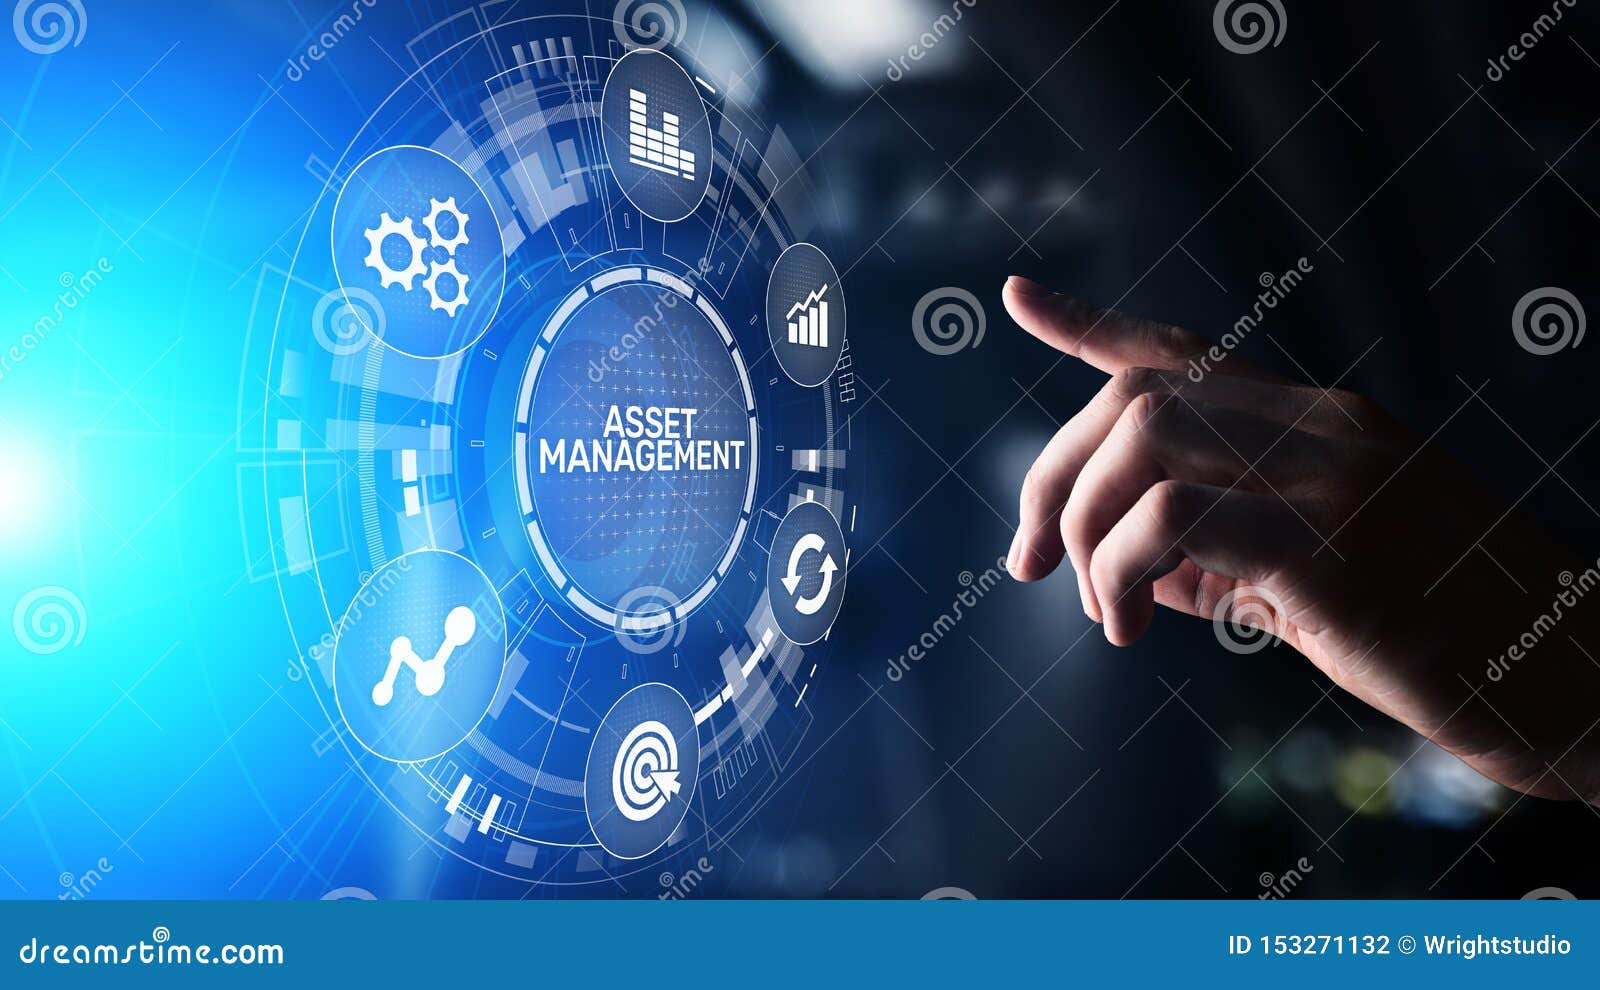 asset management concept on virtual screen. business technology concept.